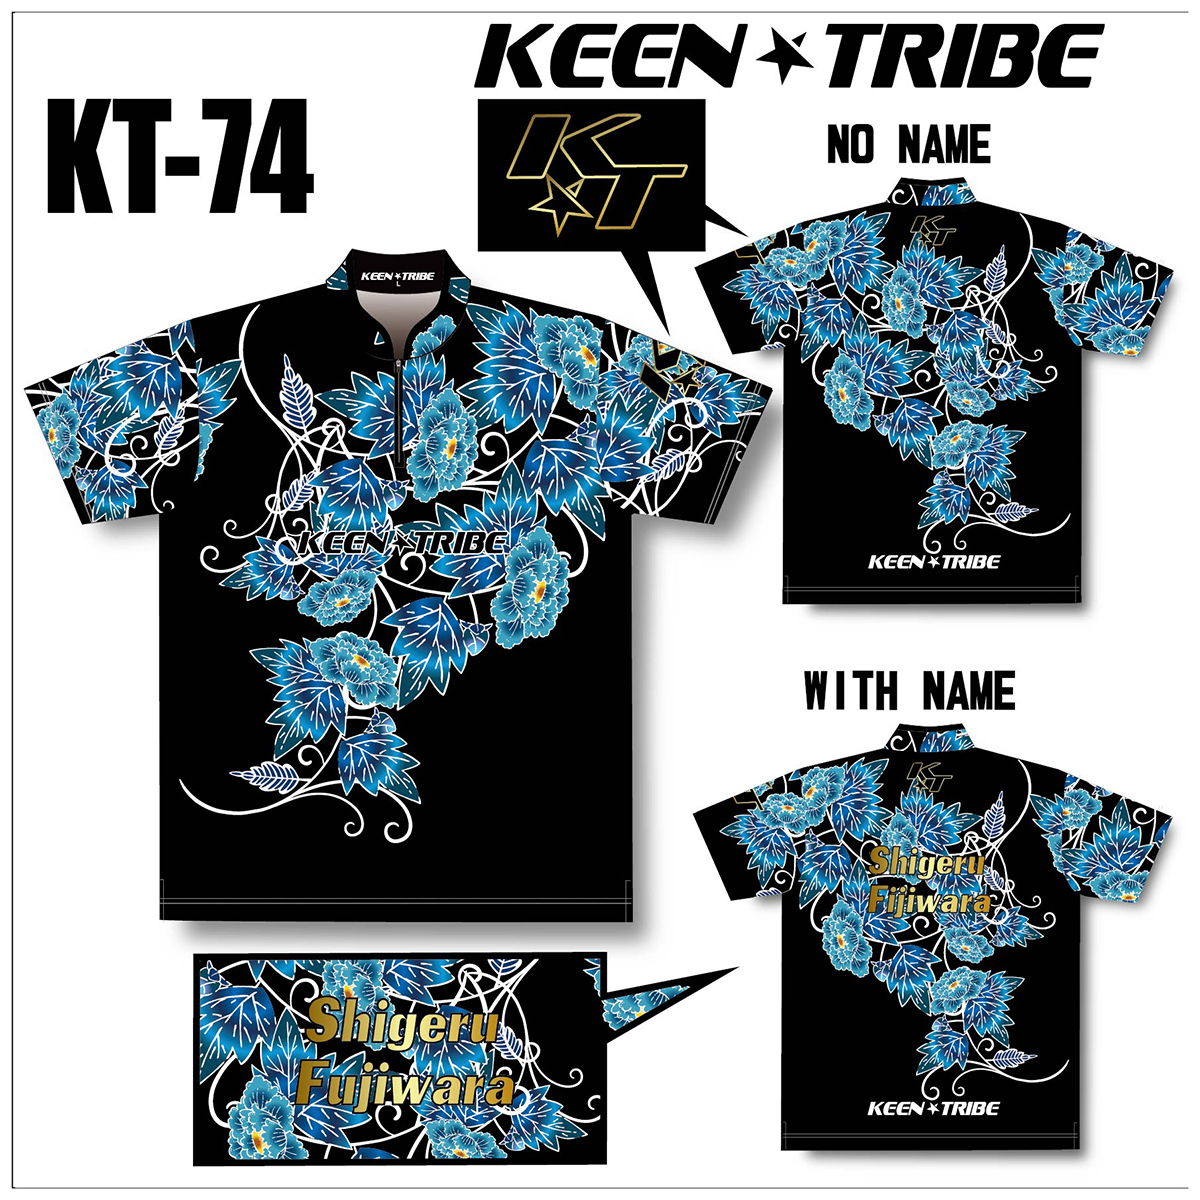 KEEN ★ TRIBE　KT-74(受注生産)【特別価格】